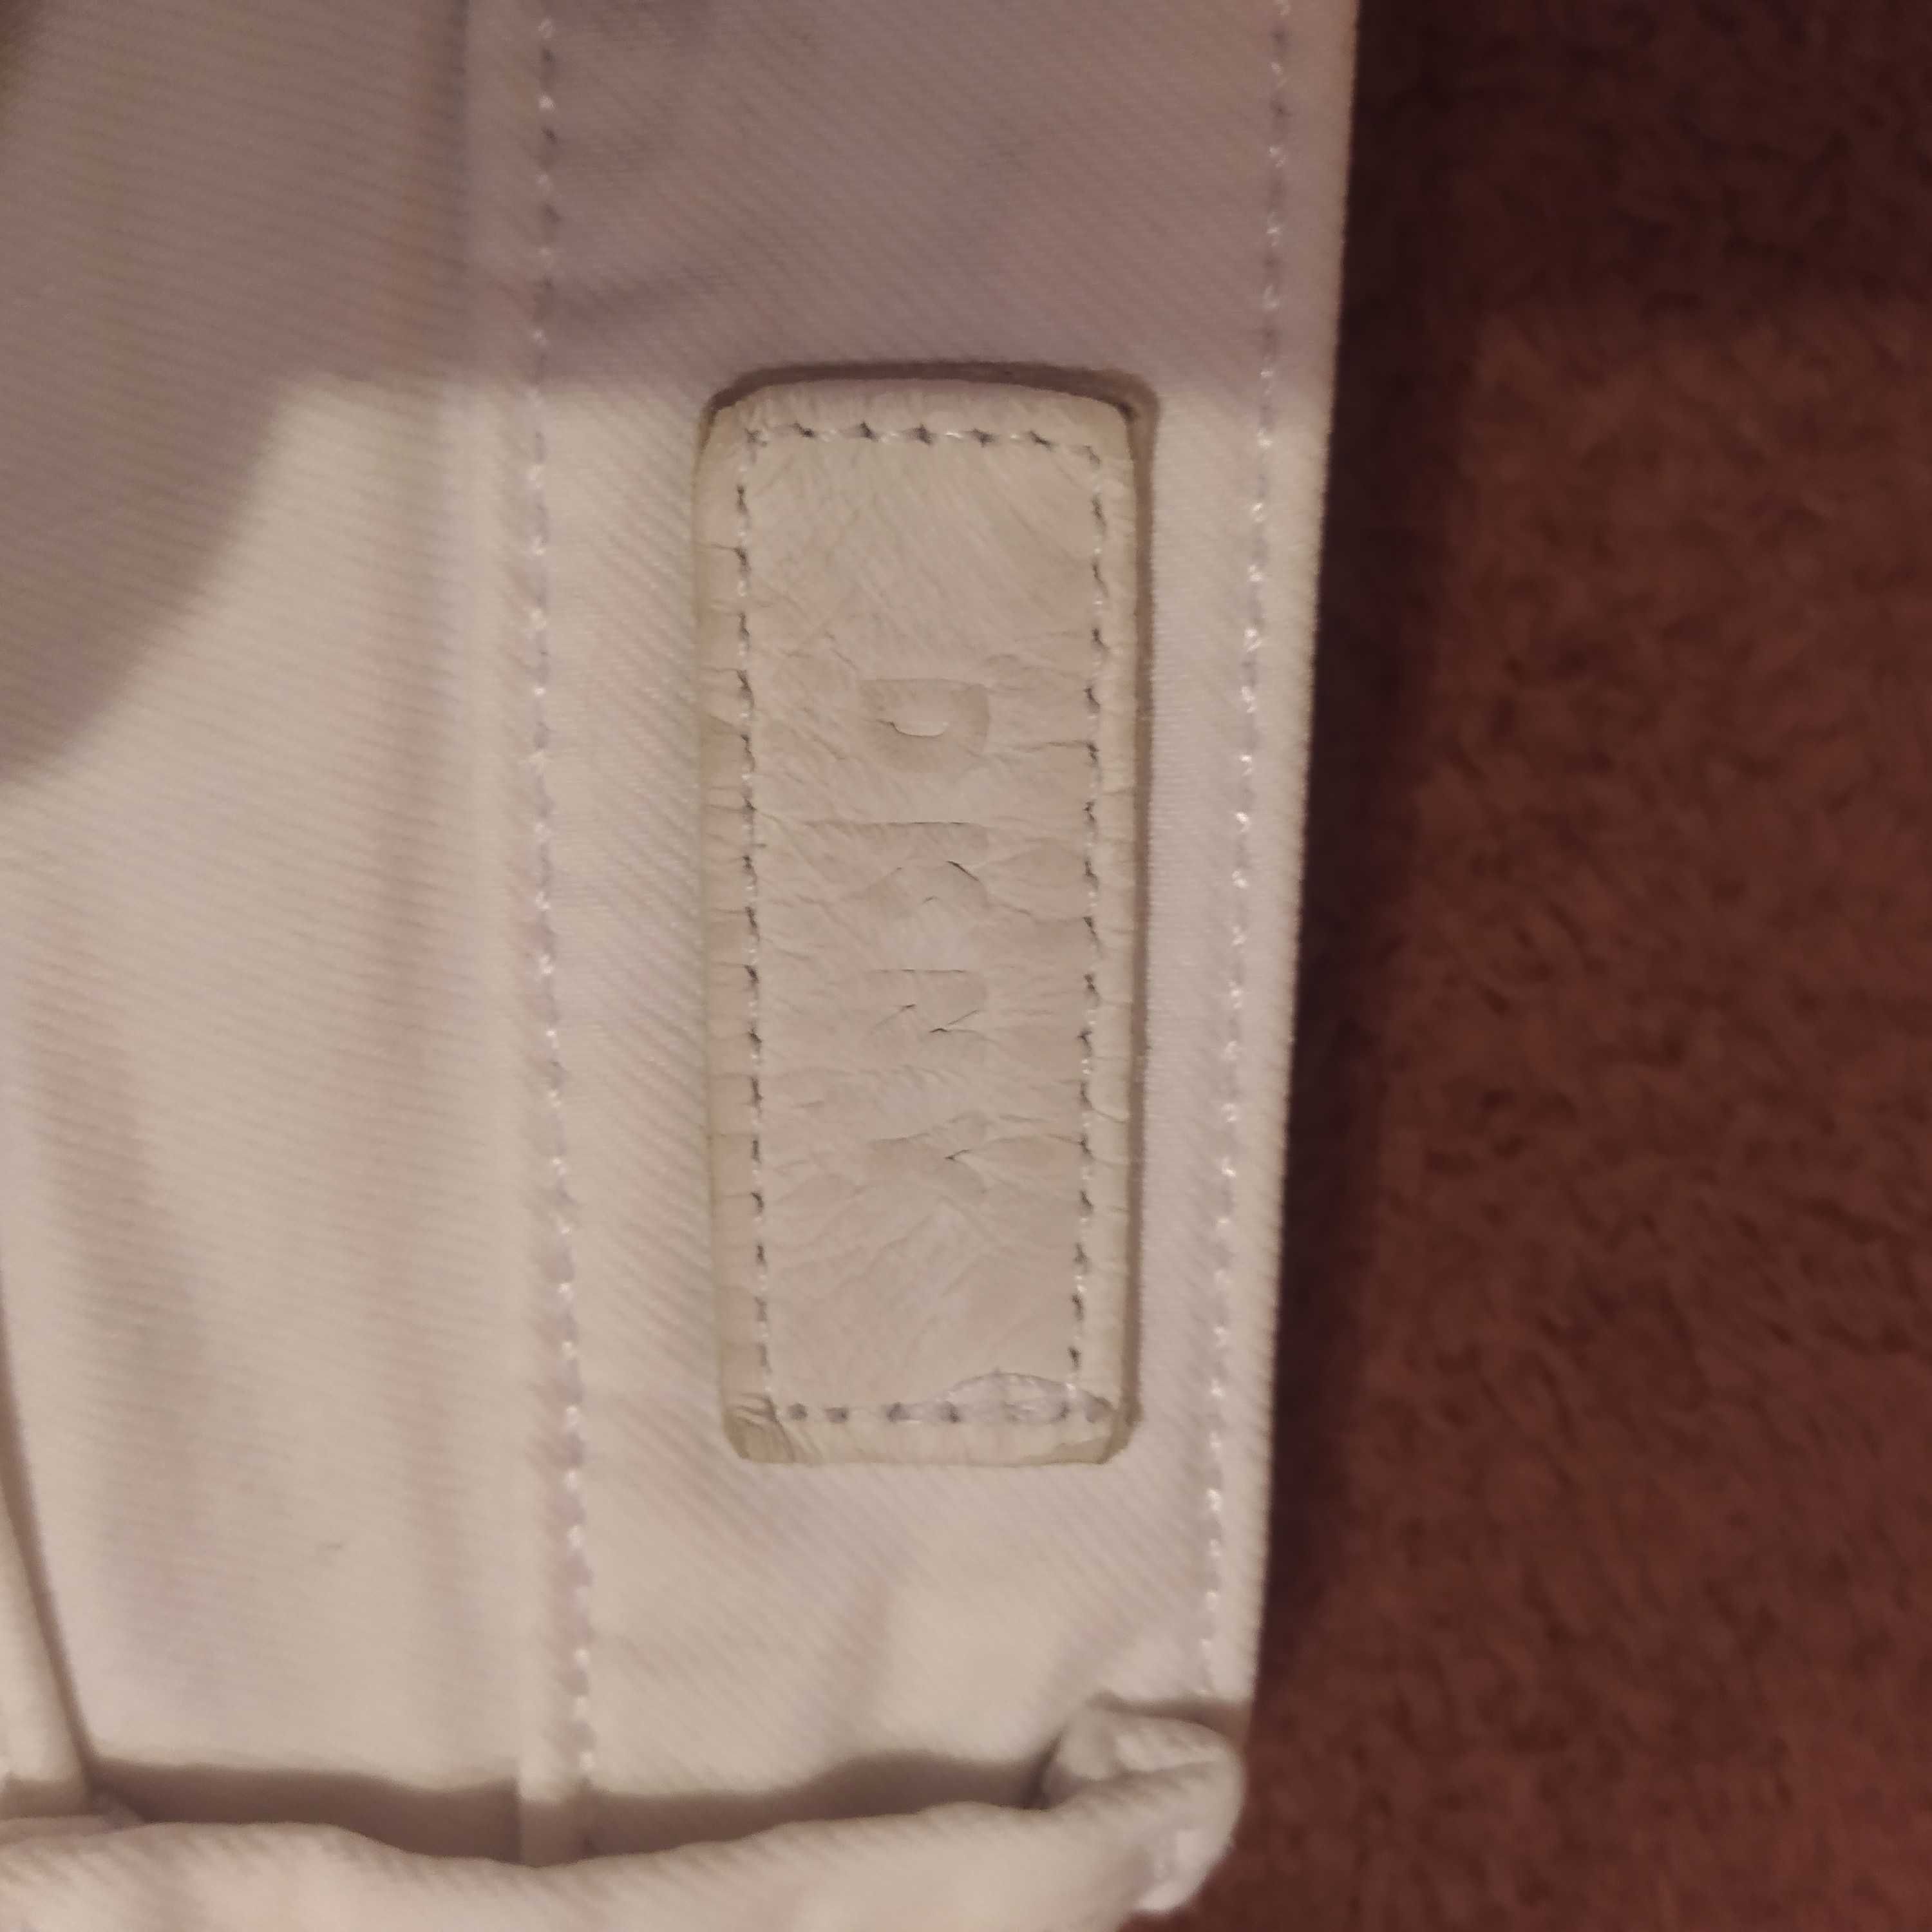 Spodnie jeansy damskie białe DKNY r. 29